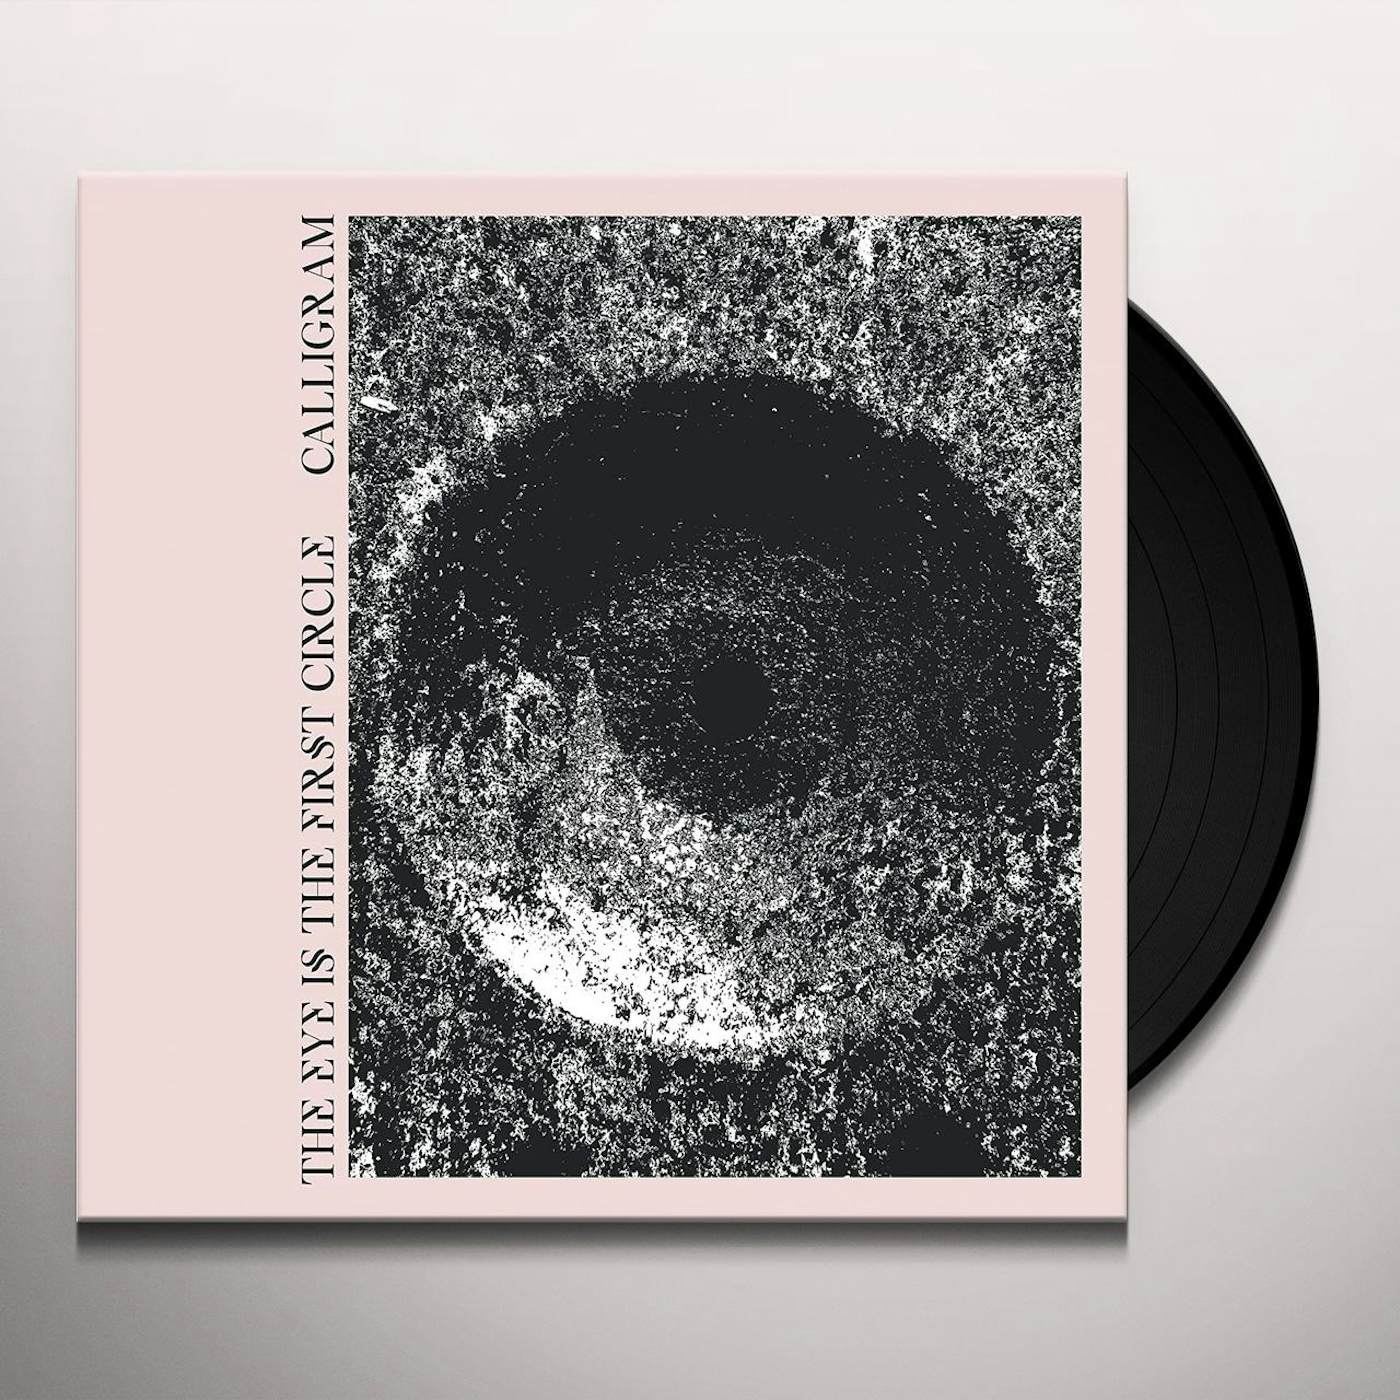 Calligram EYE IS THE FIRST CIRCLE Vinyl Record